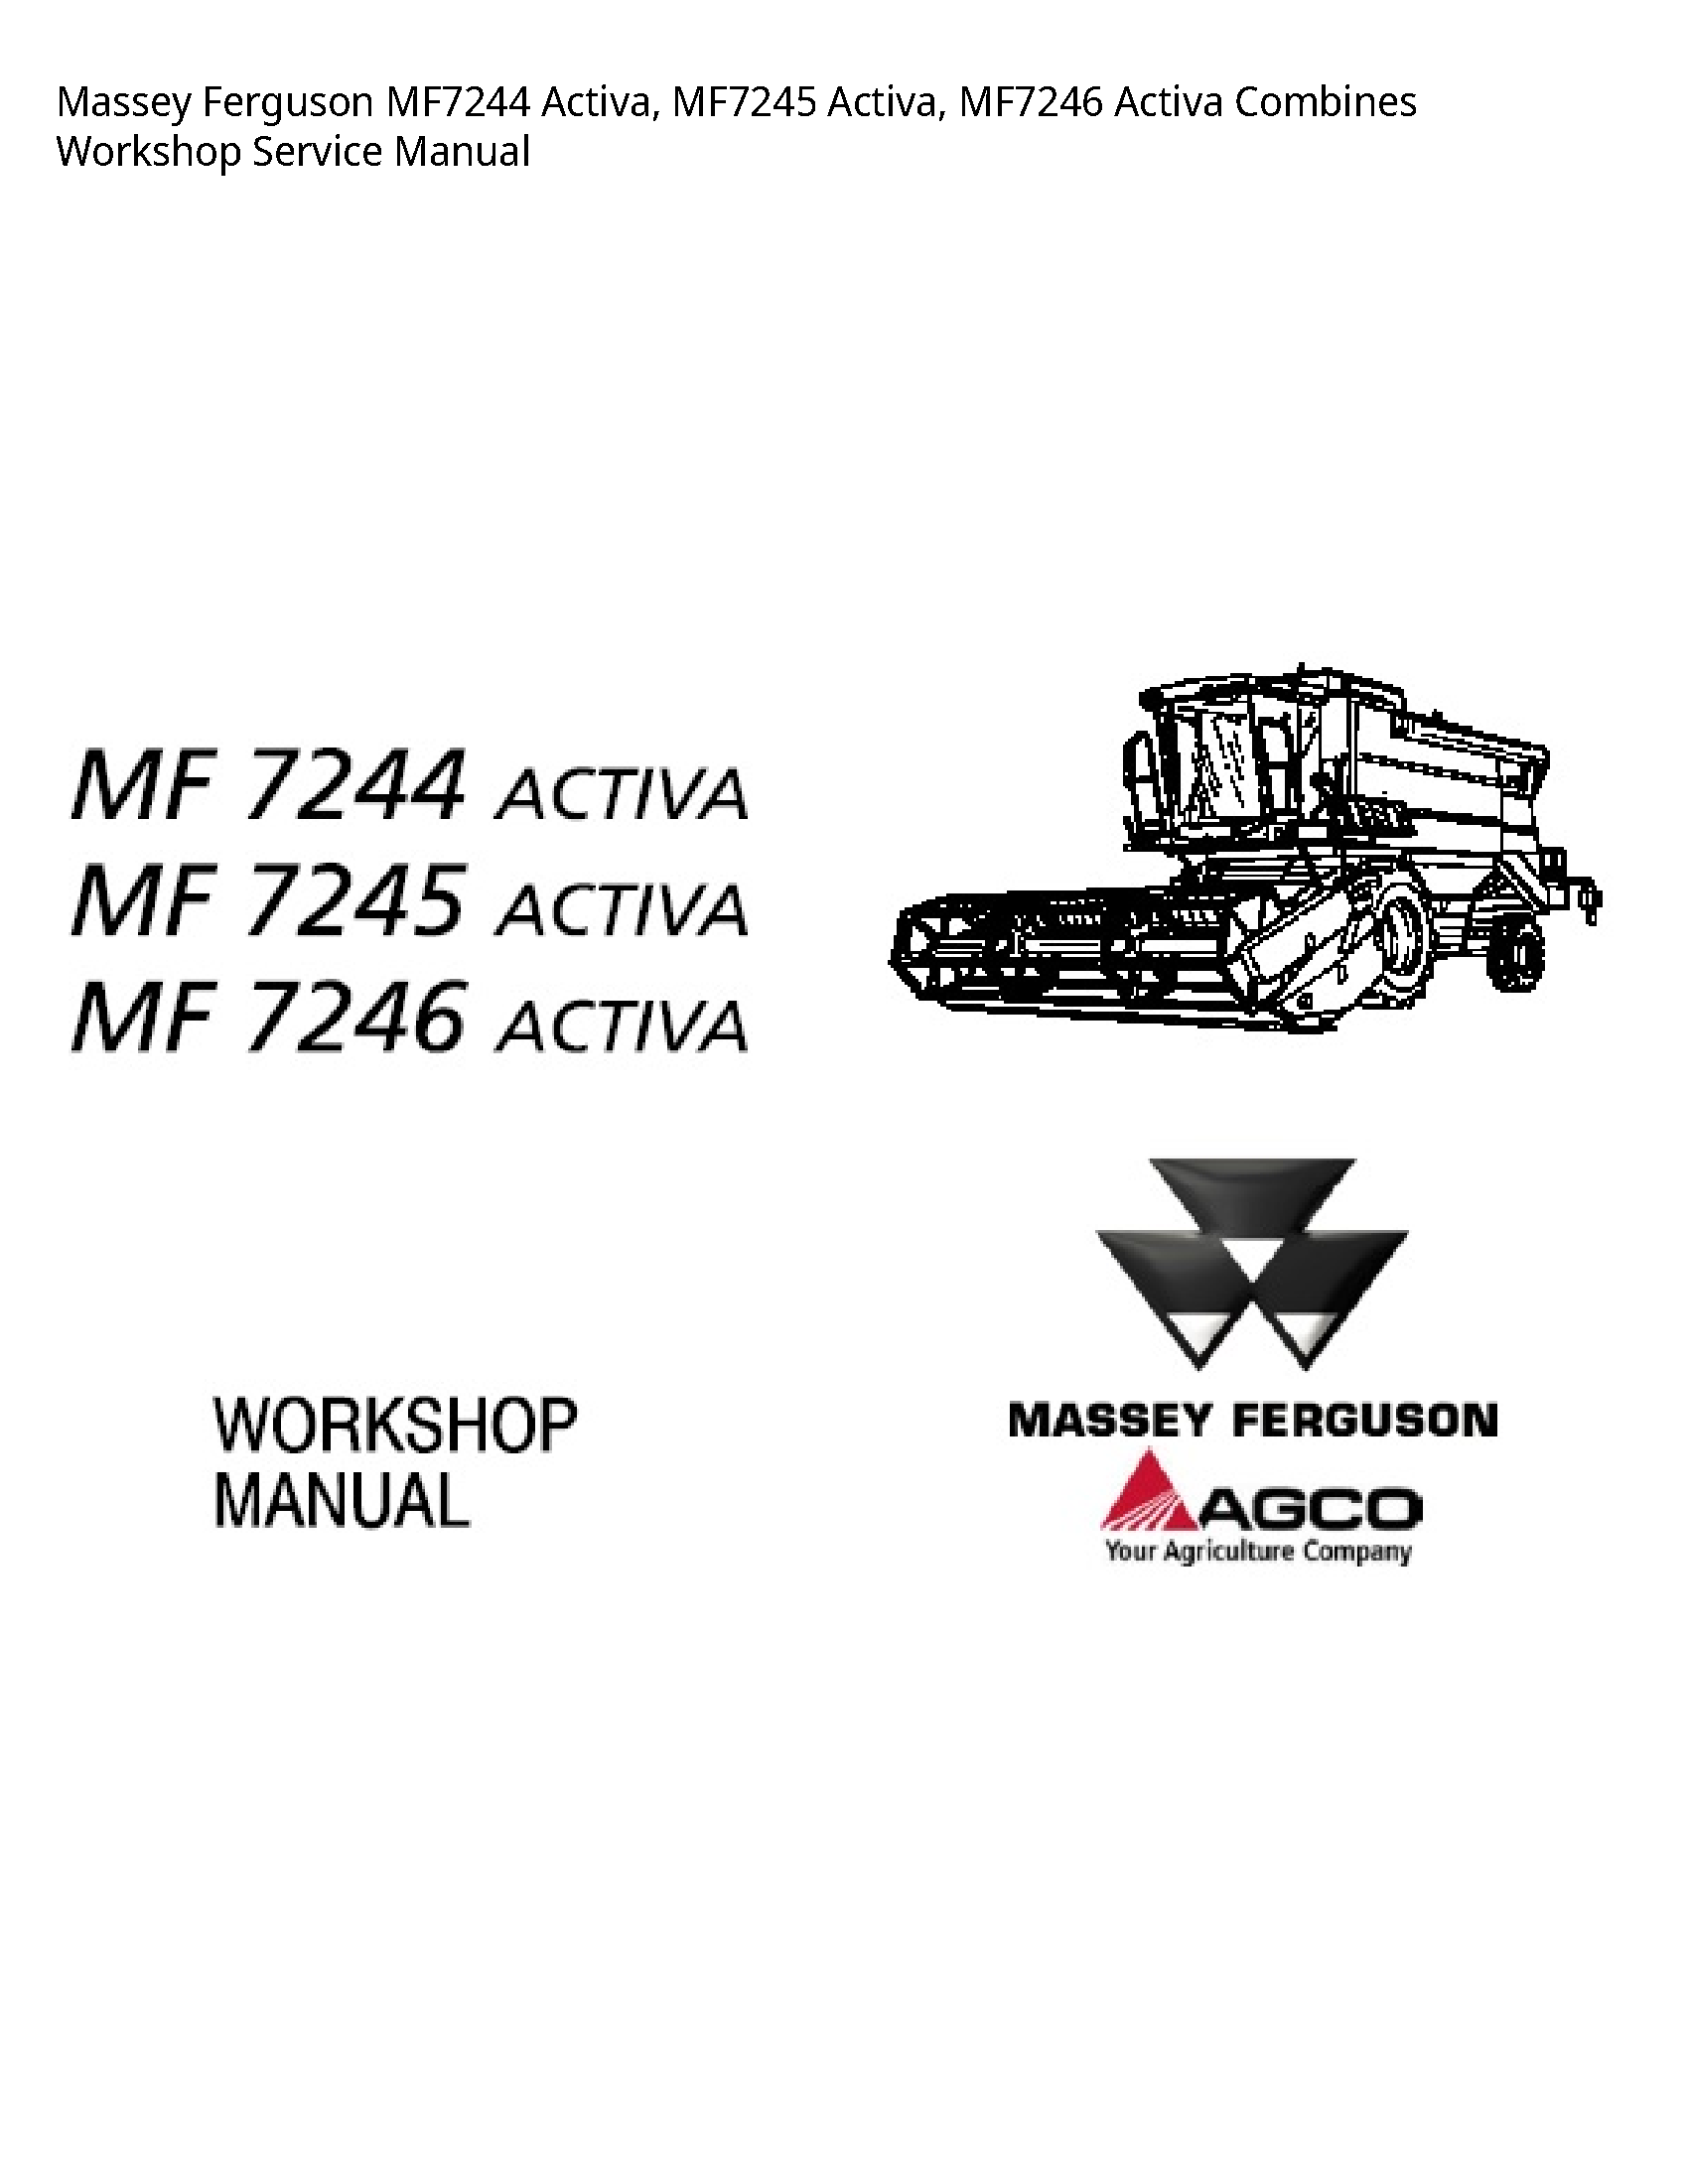 Massey Ferguson MF7244 Activa manual